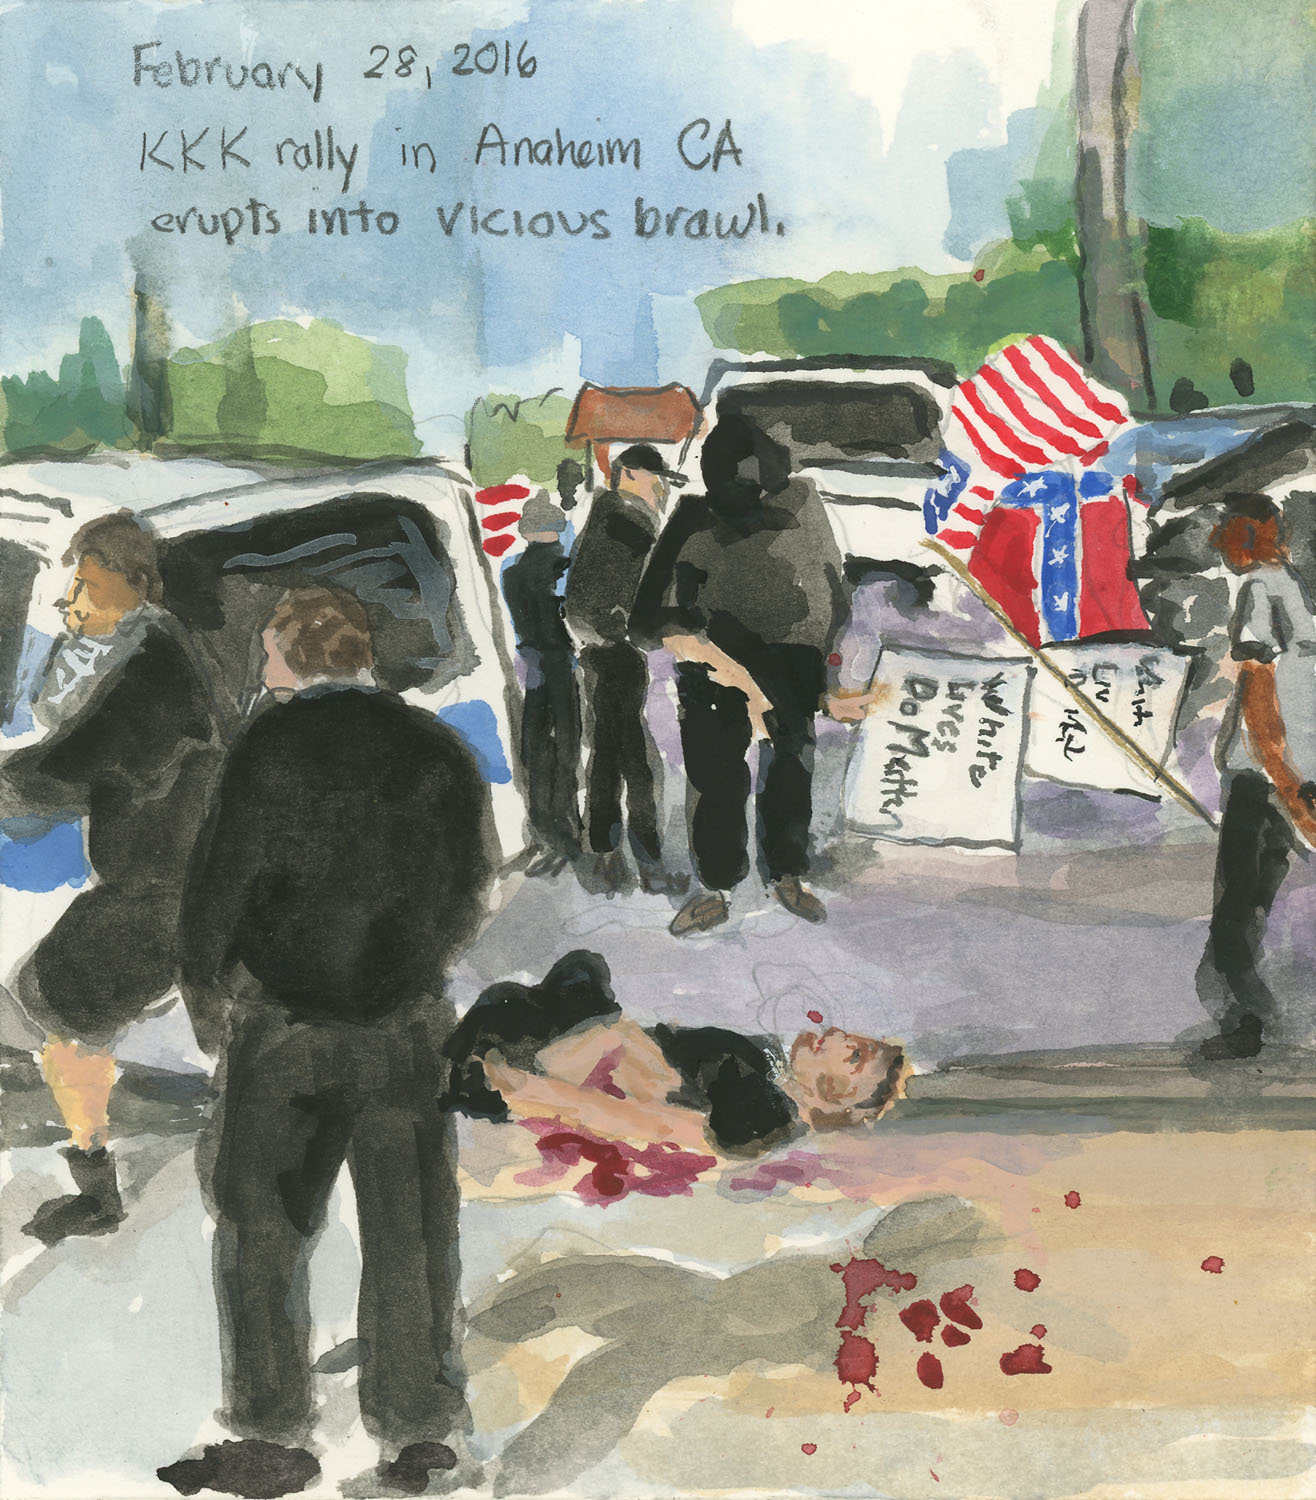 Day 99 (Feb. 28, 2016)<br>Watercolor, gouache, graphite on paper, 7 x 6 in.<br><i>KKK rally in Anaheim CA erupts into vicious brawl.</i>